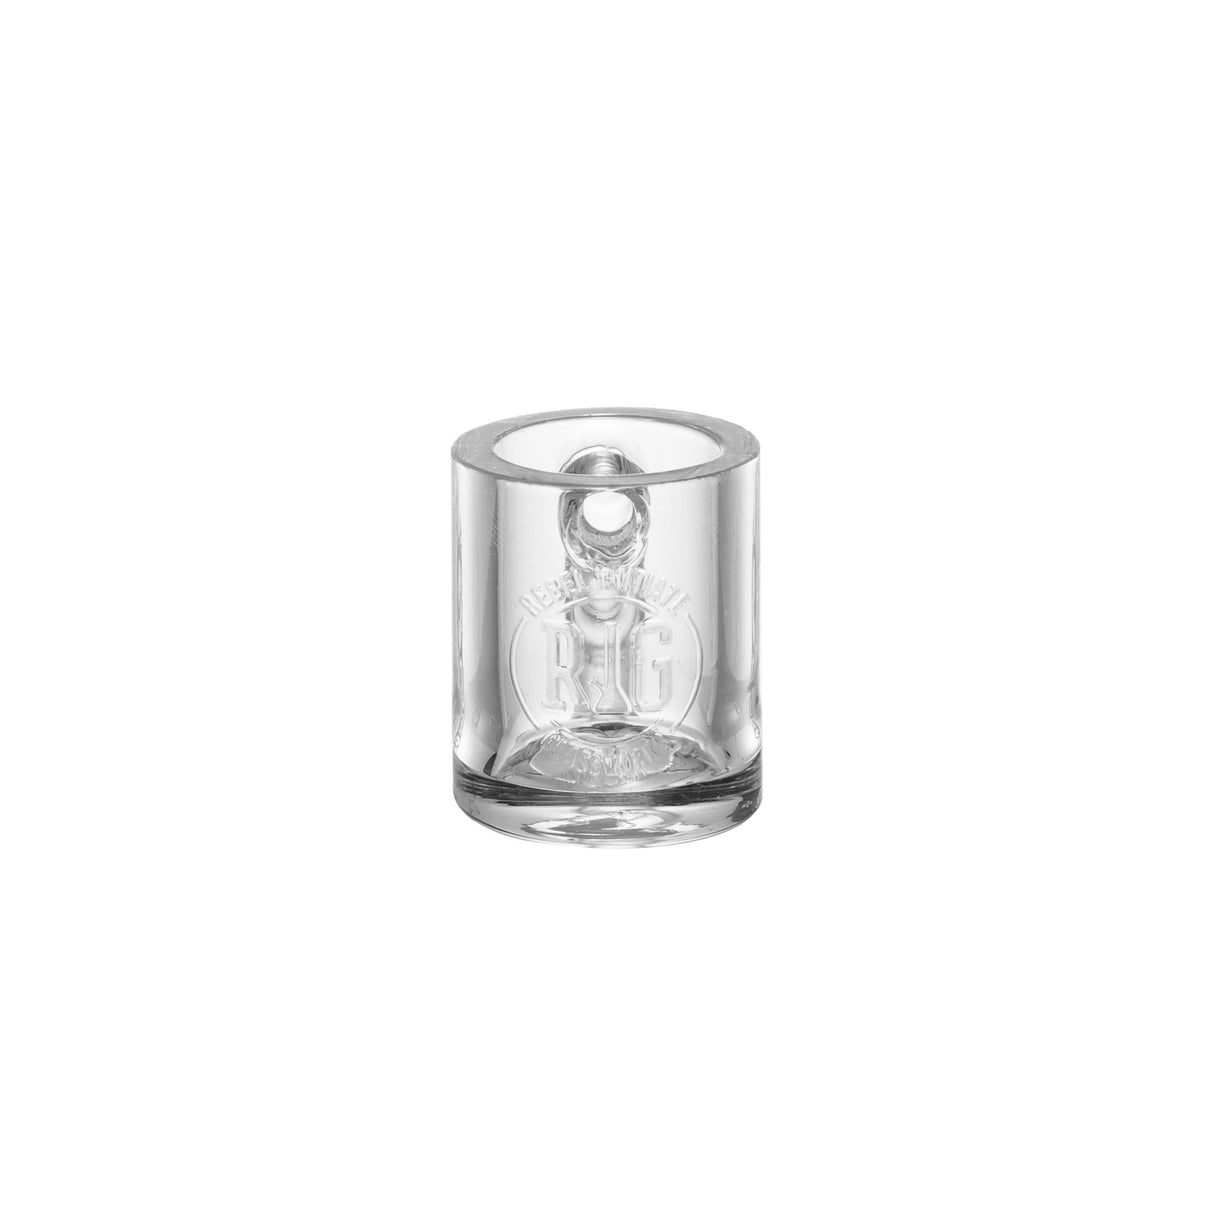 REBEL INITIATE GLASSWORKS Quartz Banger 45°, Clear Glass, Front View